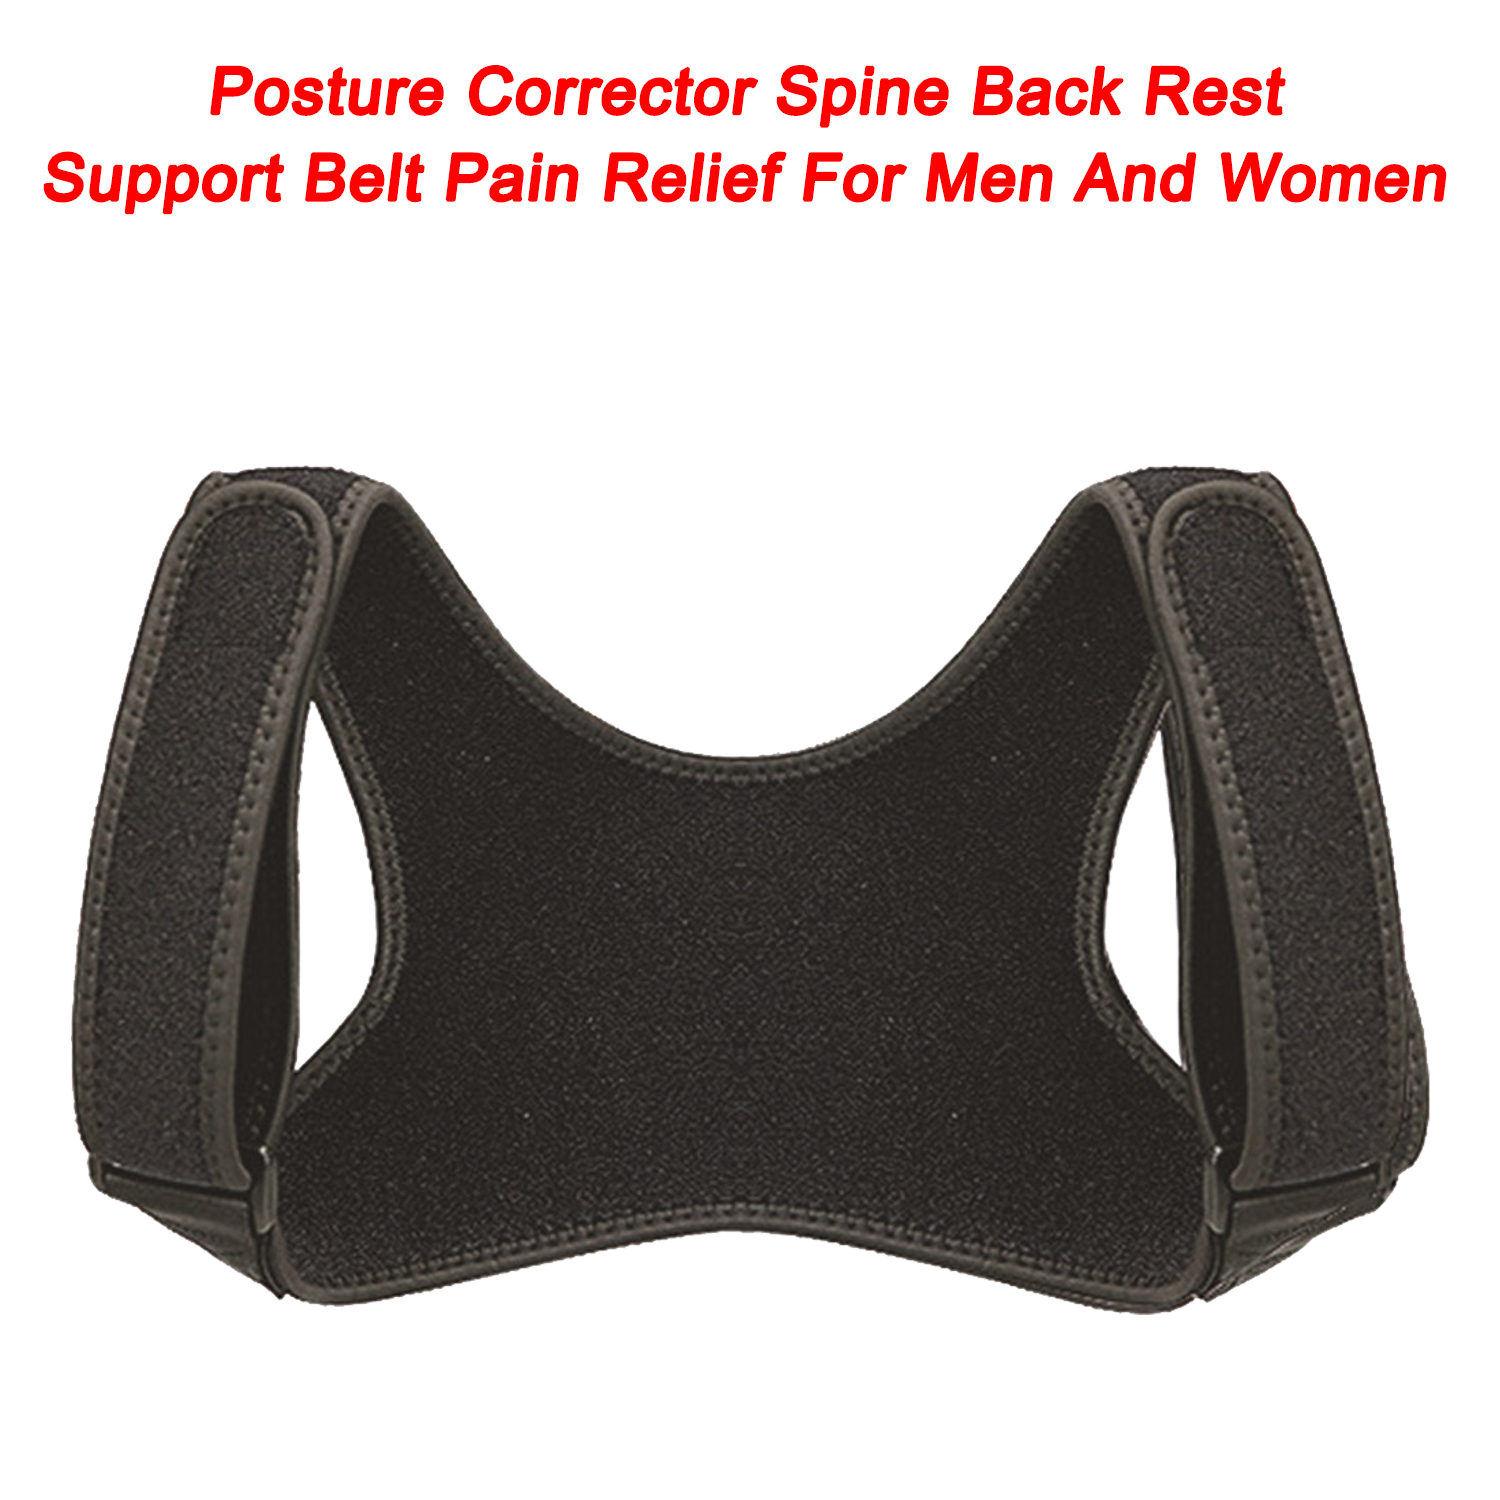 Spine Back Rest Support Belt Pain Relief Posture Corrector For Men And Women